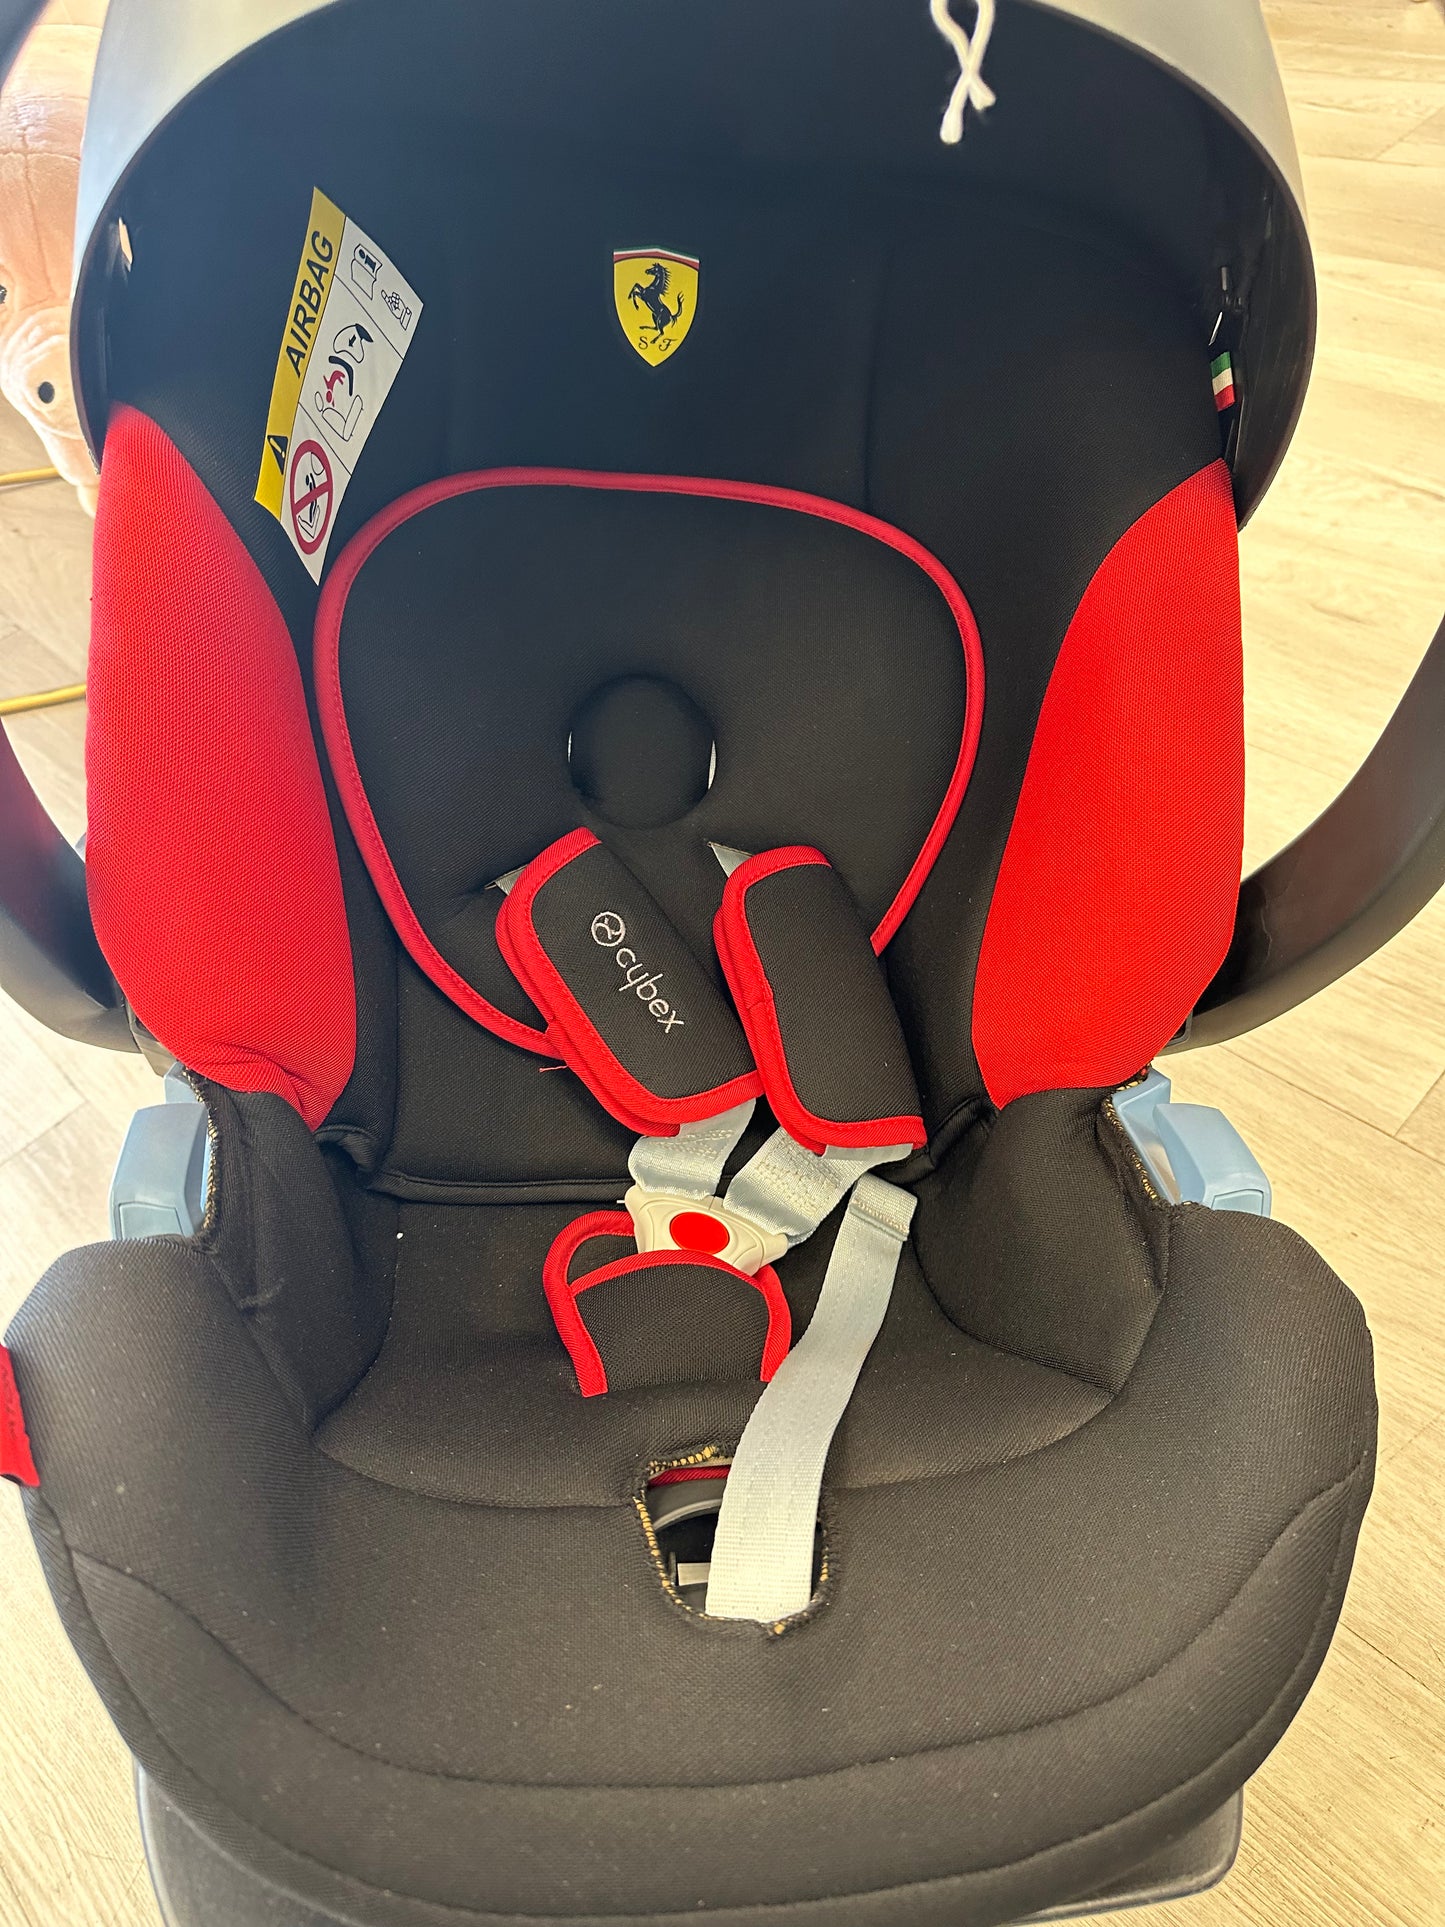 Cybex Infant Car Seats